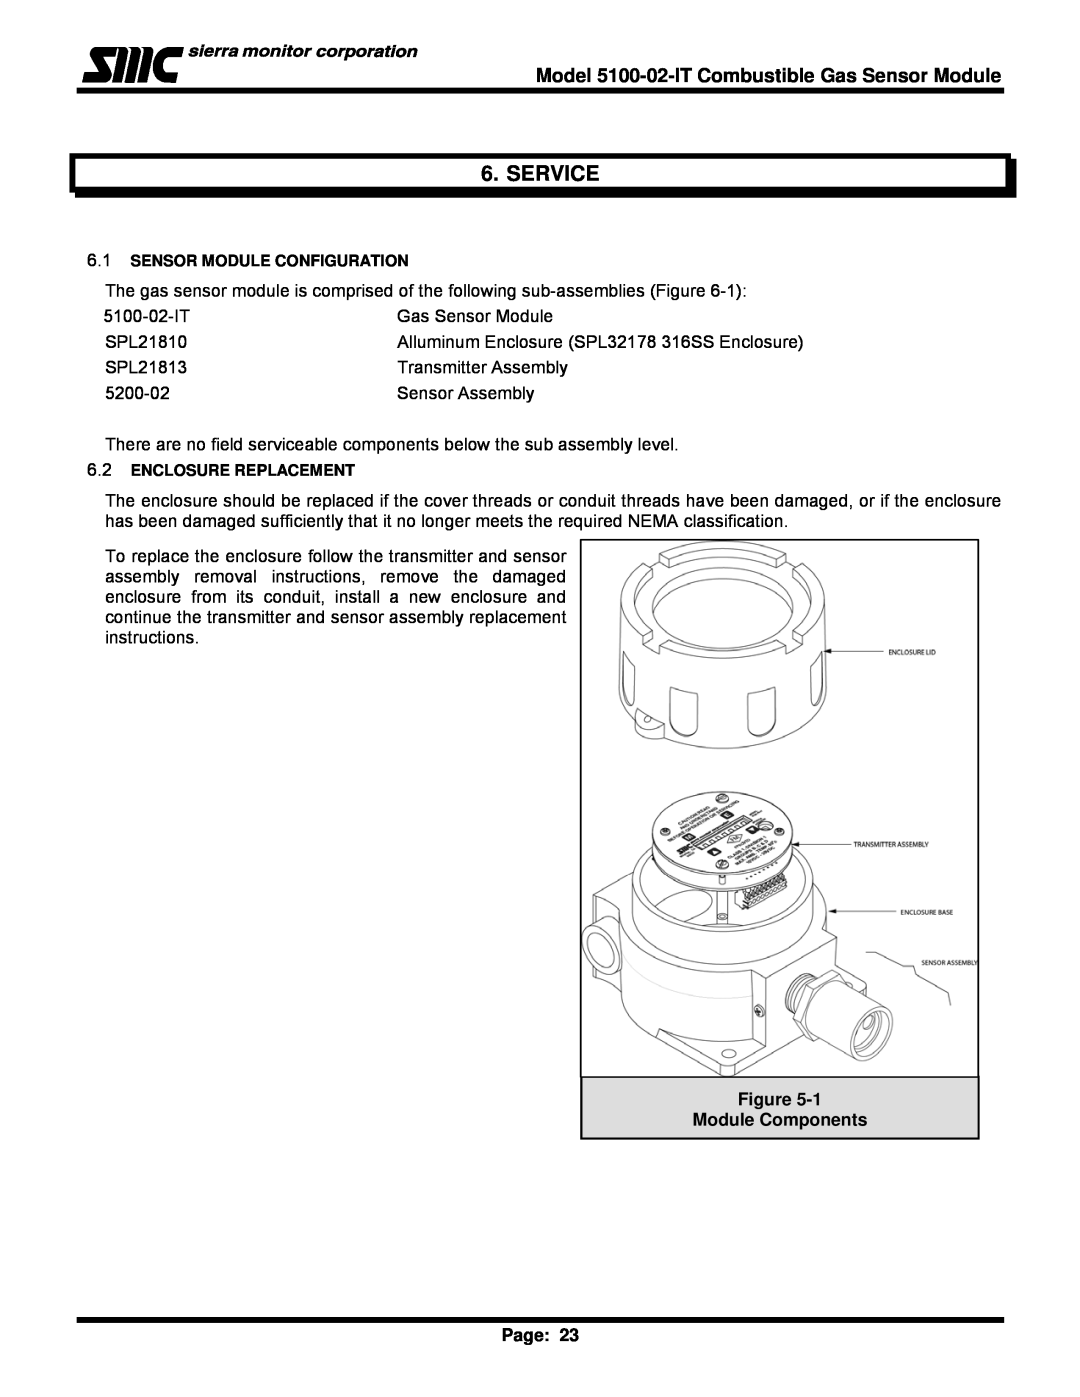 Univex IT Series Service, Figure Module Components Page, Model 5100-02-ITCombustible Gas Sensor Module 